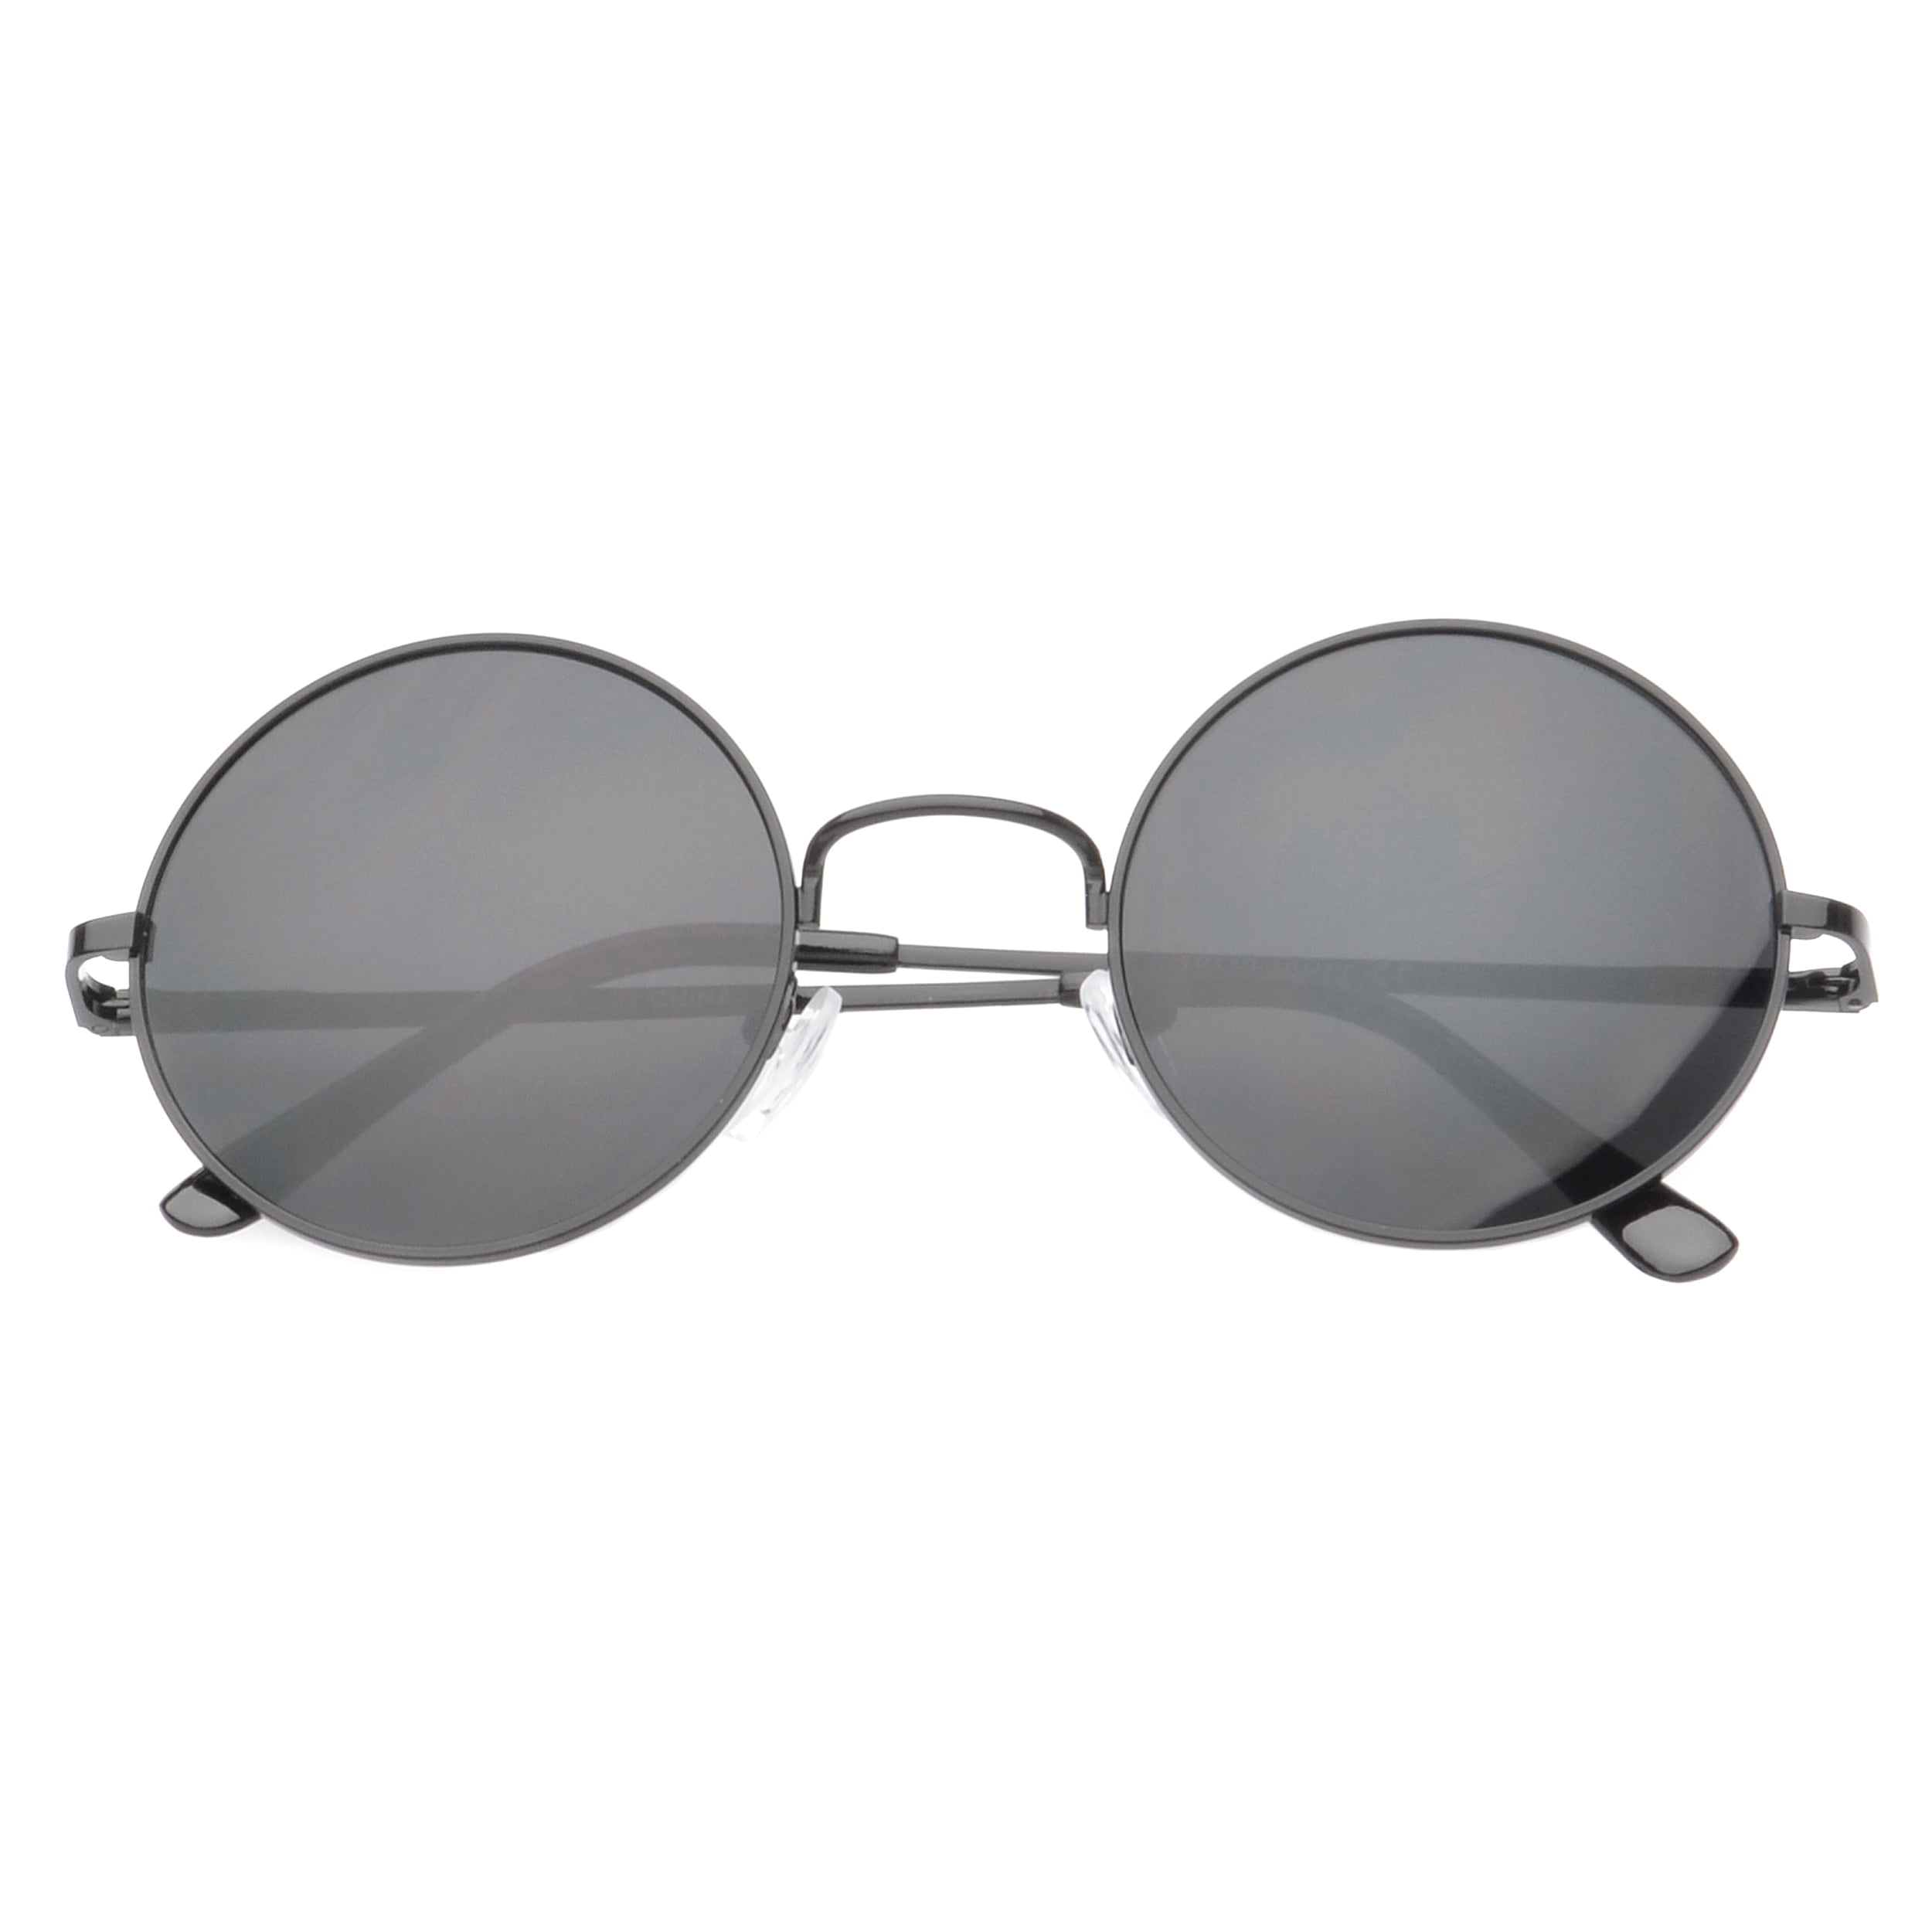 MLC Eyewear Vintage John Lennon Inspired Round Sunglasses Classic ...